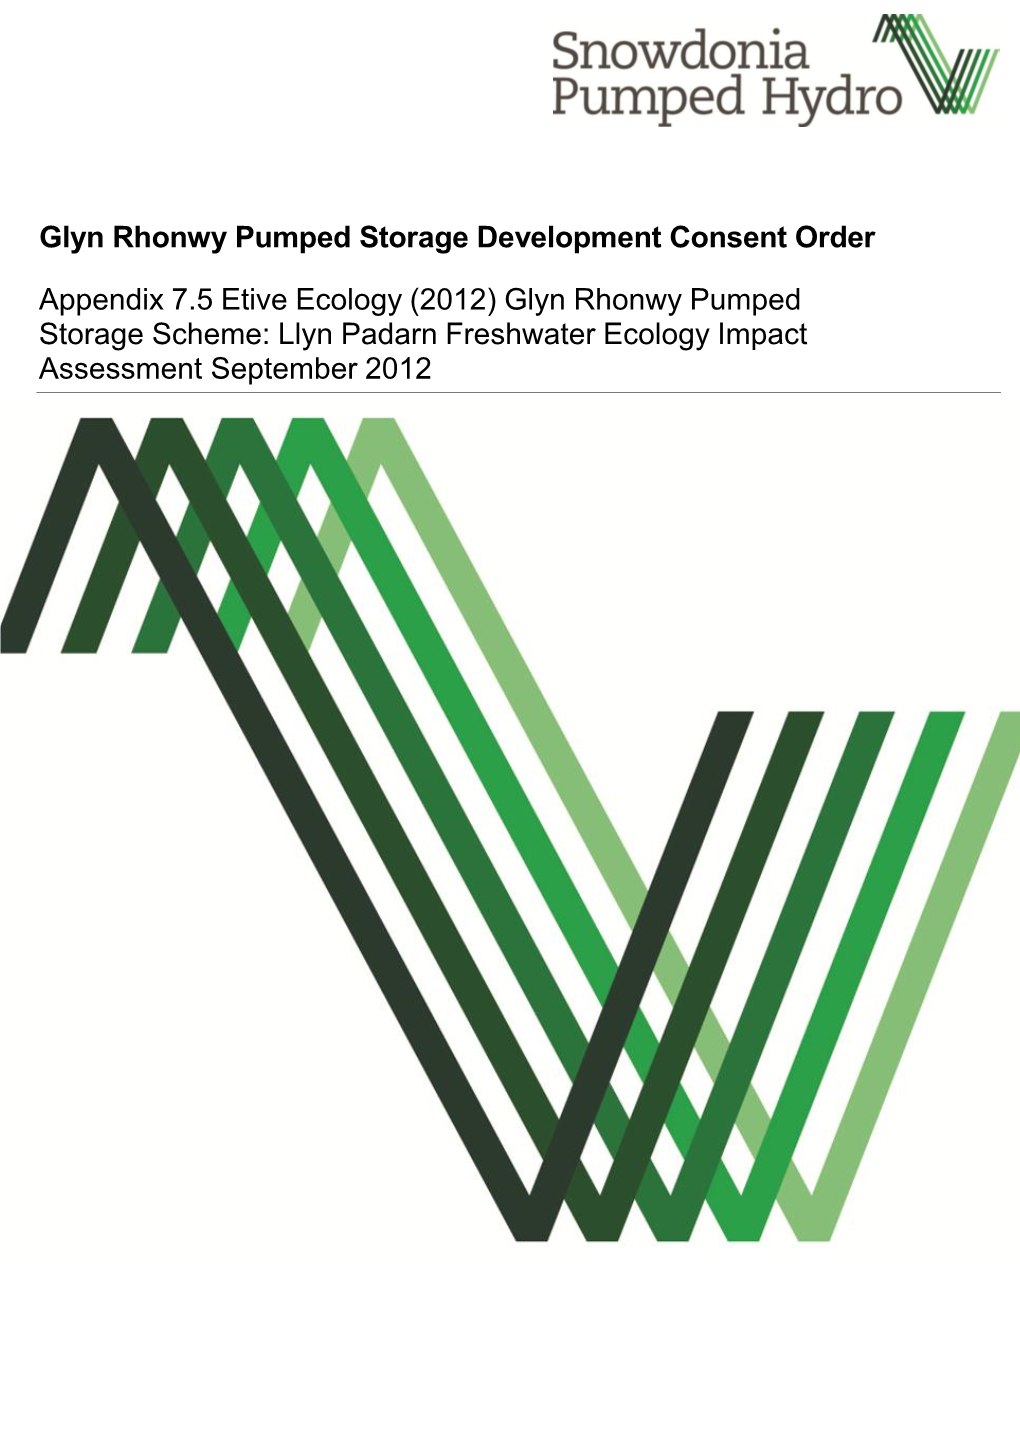 (2012) Glyn Rhonwy Pumped Storage Scheme: Llyn Padarn Freshwater Ecology Impact Assessment September 2012